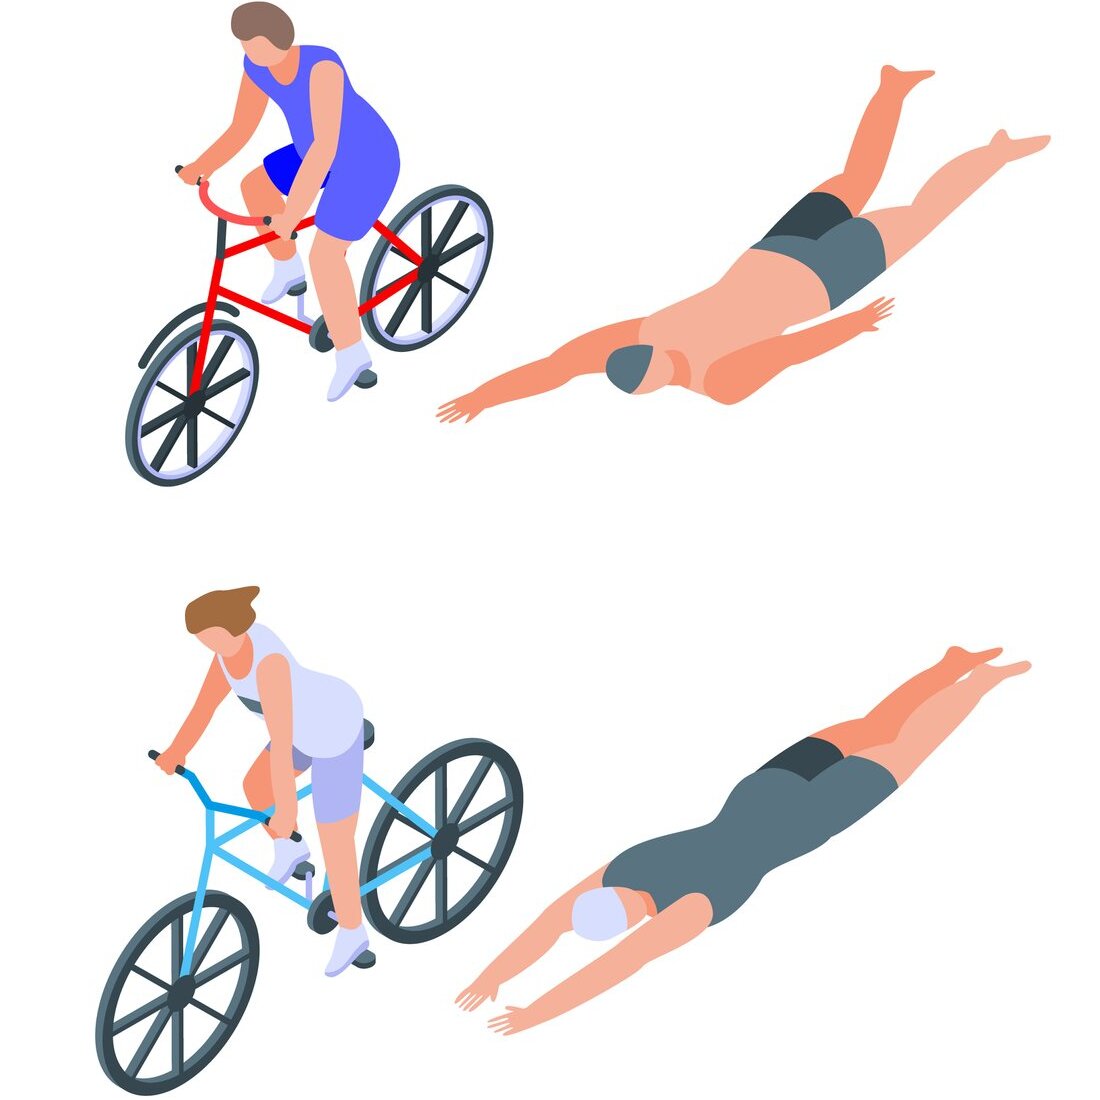 Triathlon icons set, isometric style.